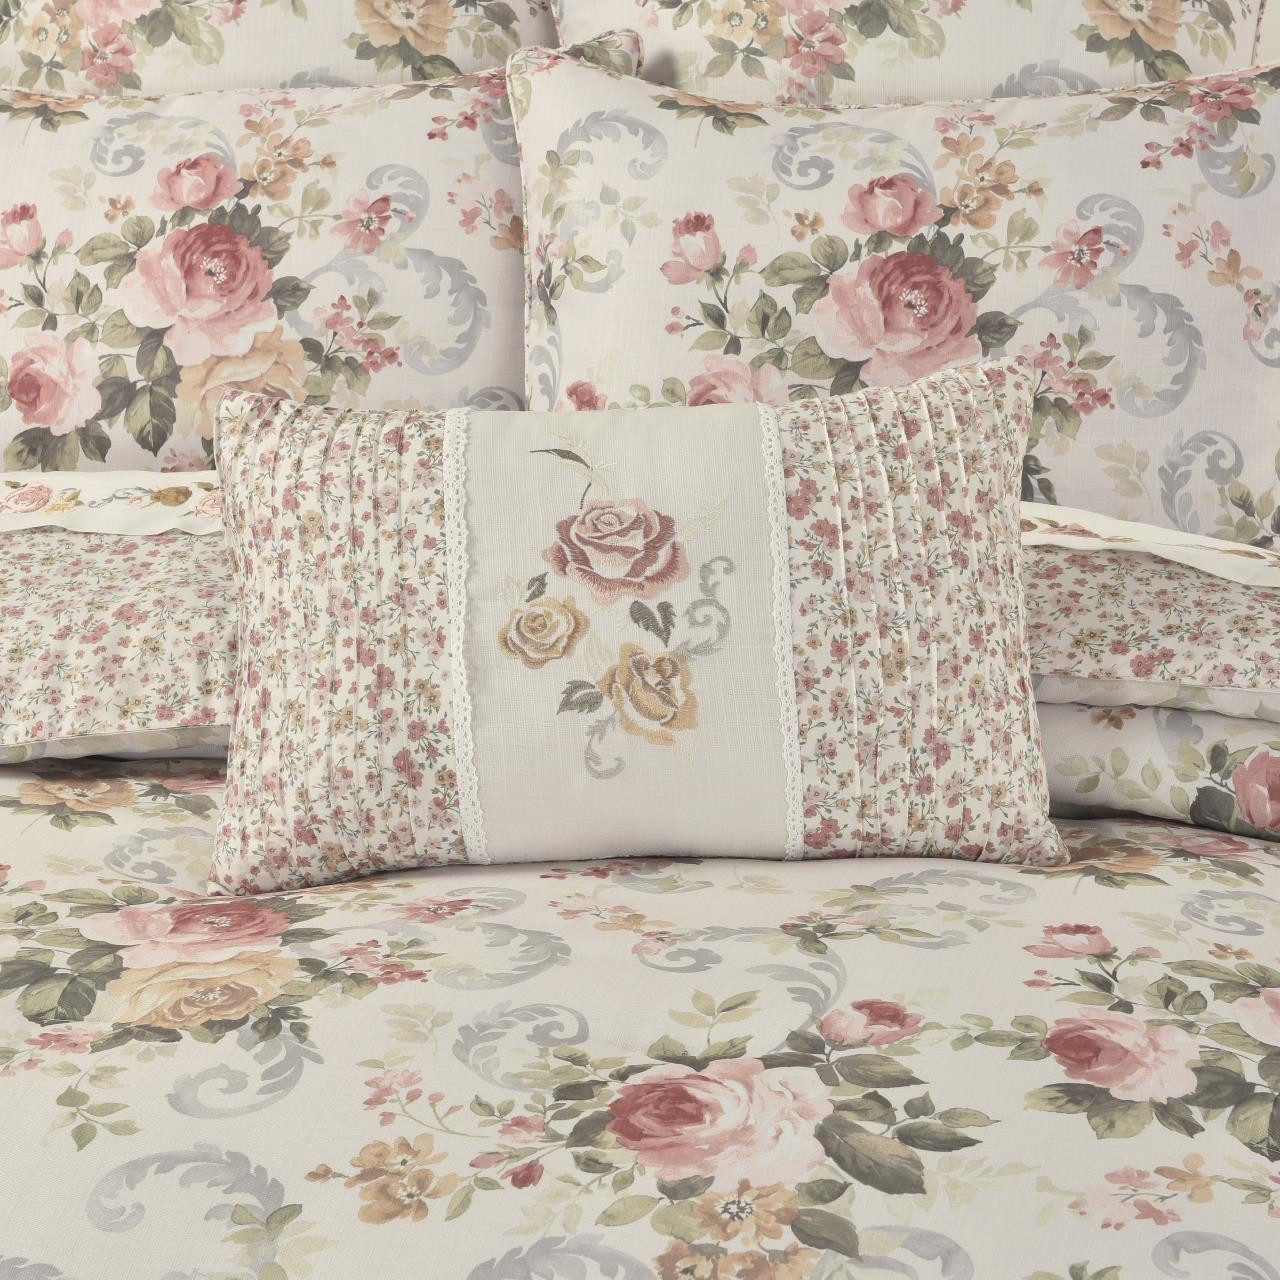 Chablis Rose Gold Boudoir Pillow - 193842136294